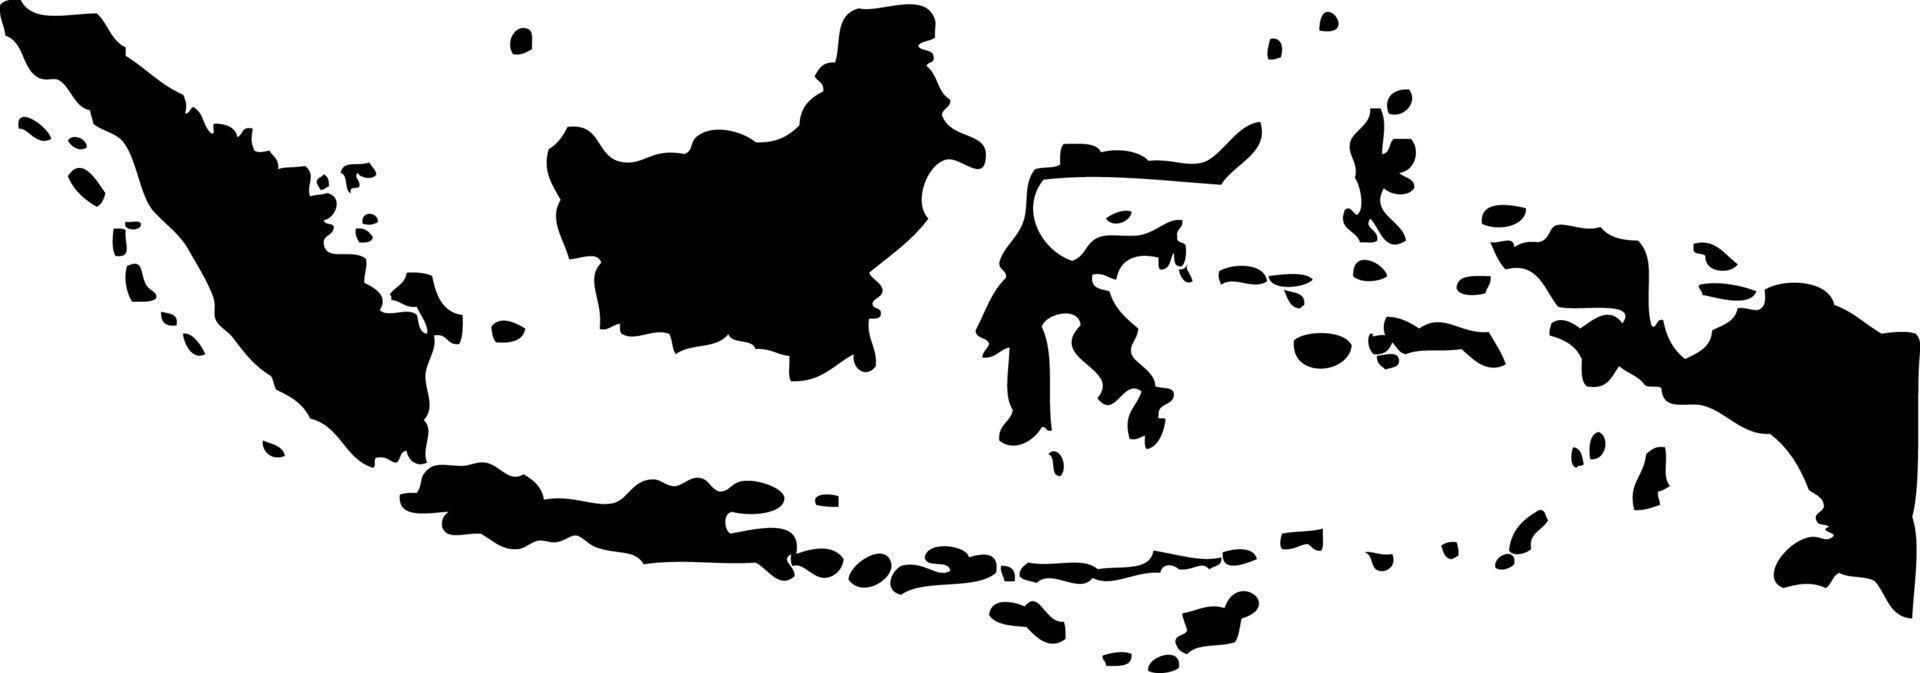 Asien indonesien vektor map.hand dragen minimalism stil.